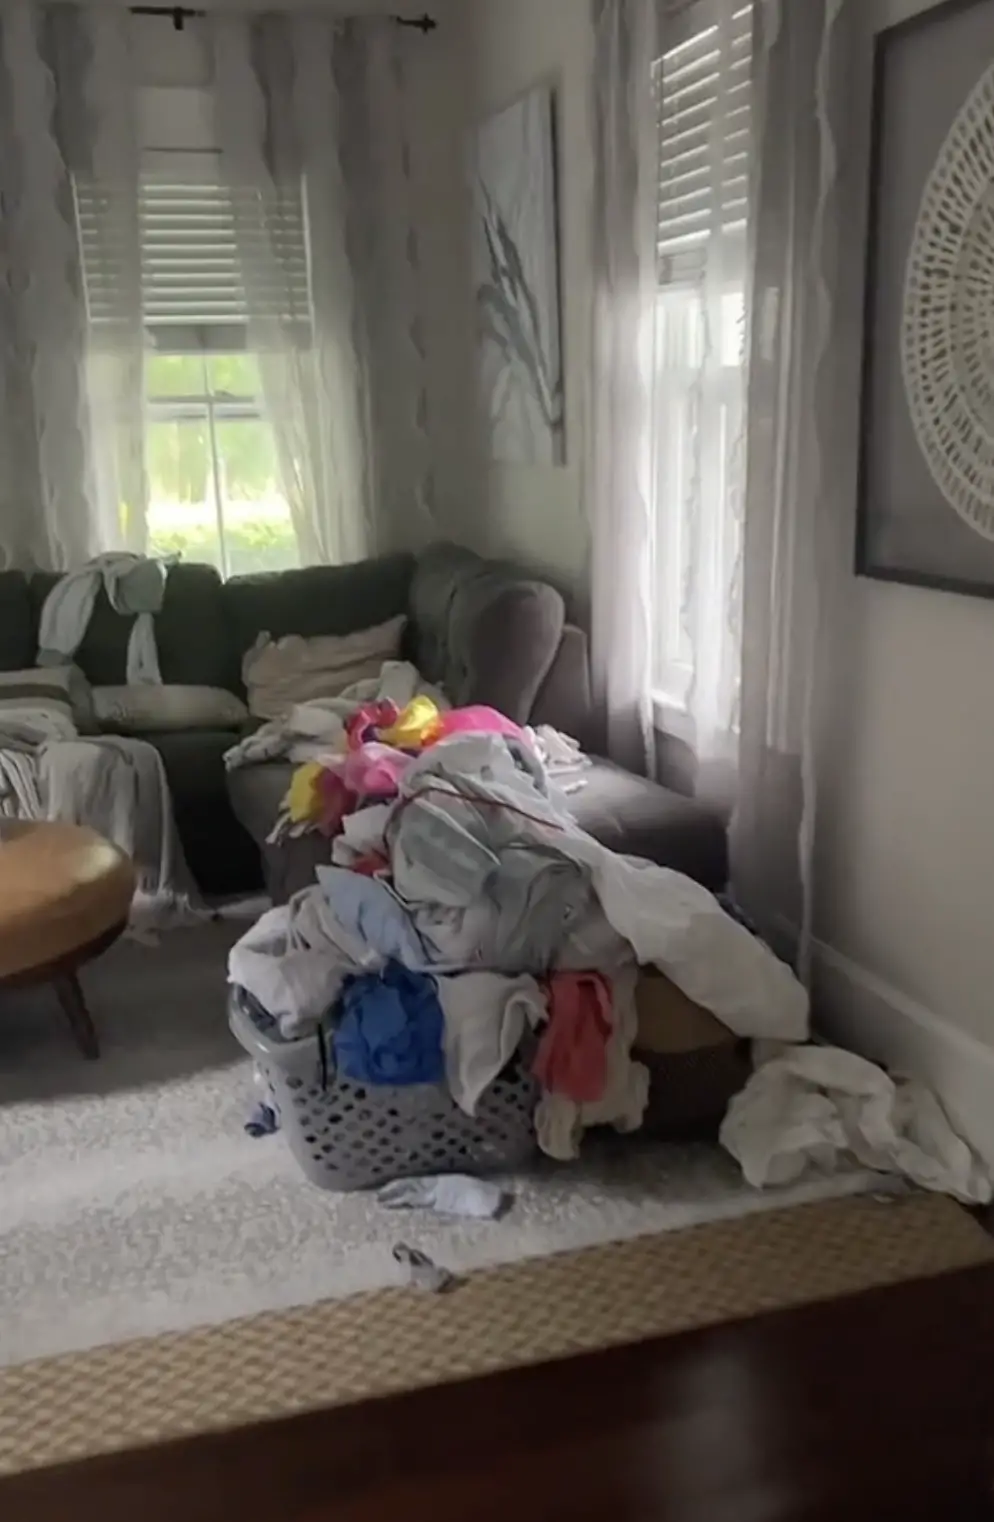 Lindsay's living room with a pile of laundry | Source: TikTok.com/@lindsaydonnelly2